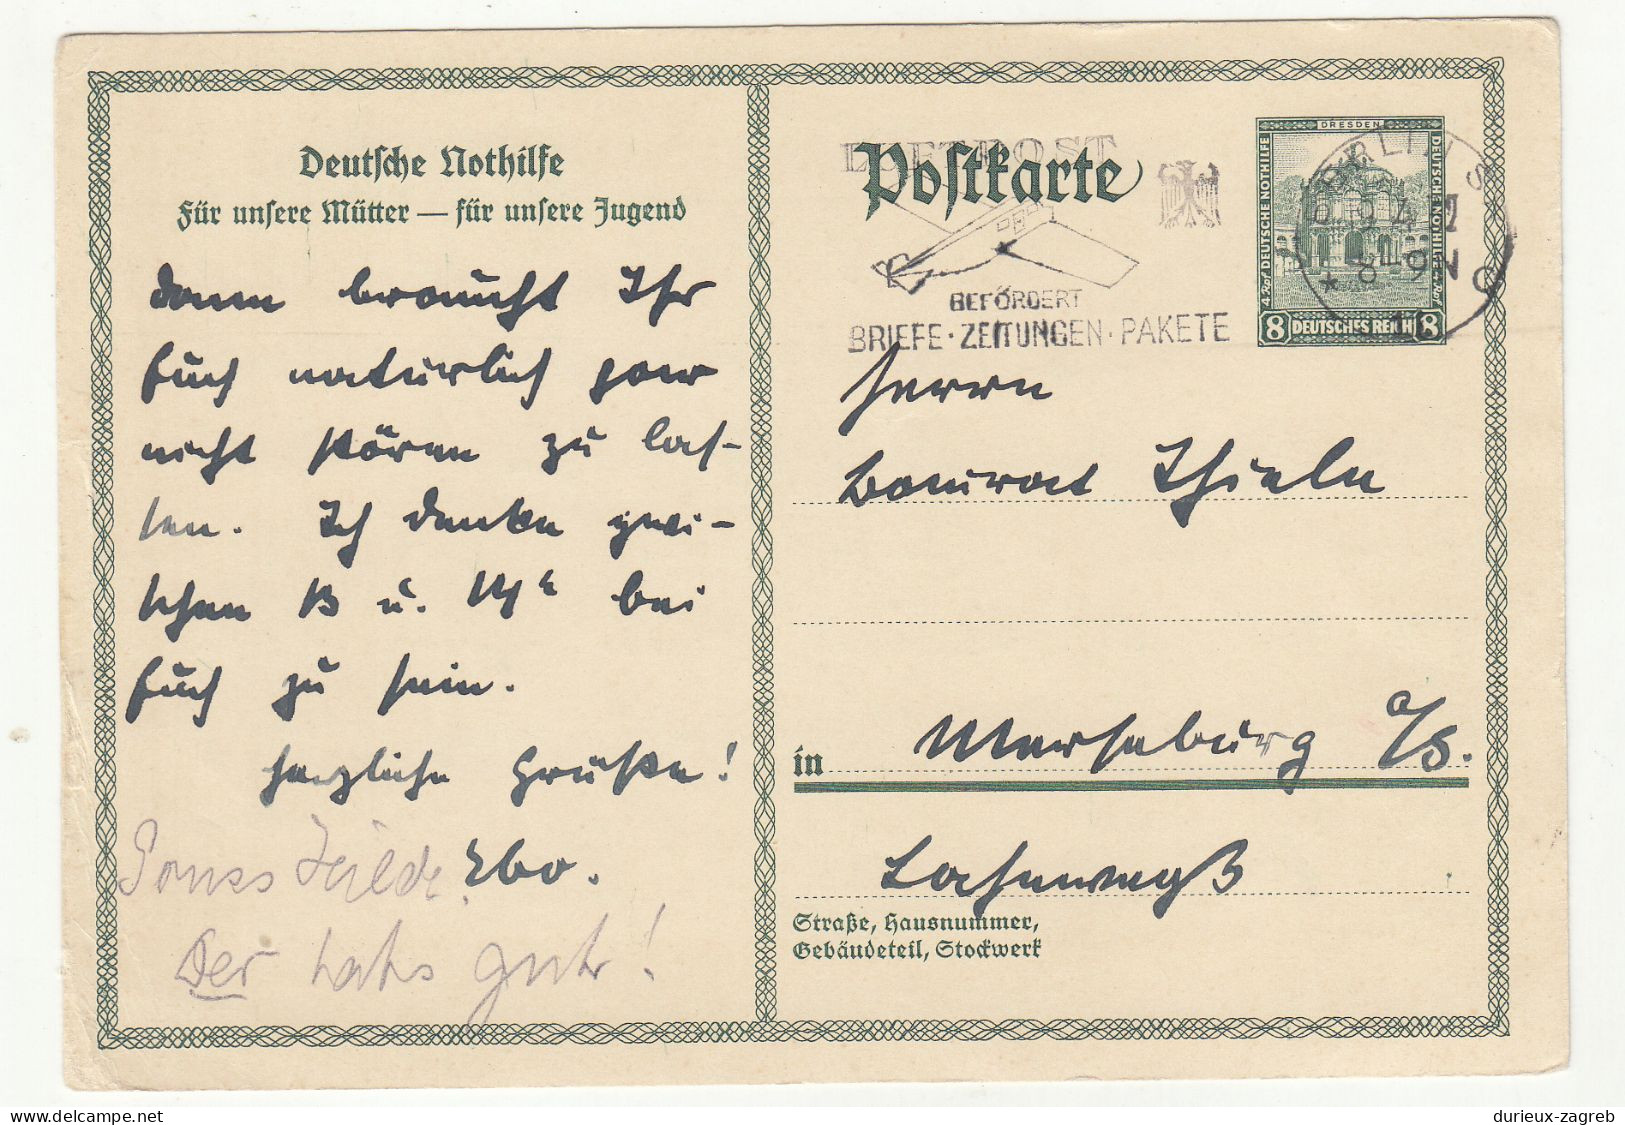 Germany Deutsche Nothilfe Postal Stationery Postcard Posted 1932 - Luftpost Slogan Postmark B240401 - Postcards